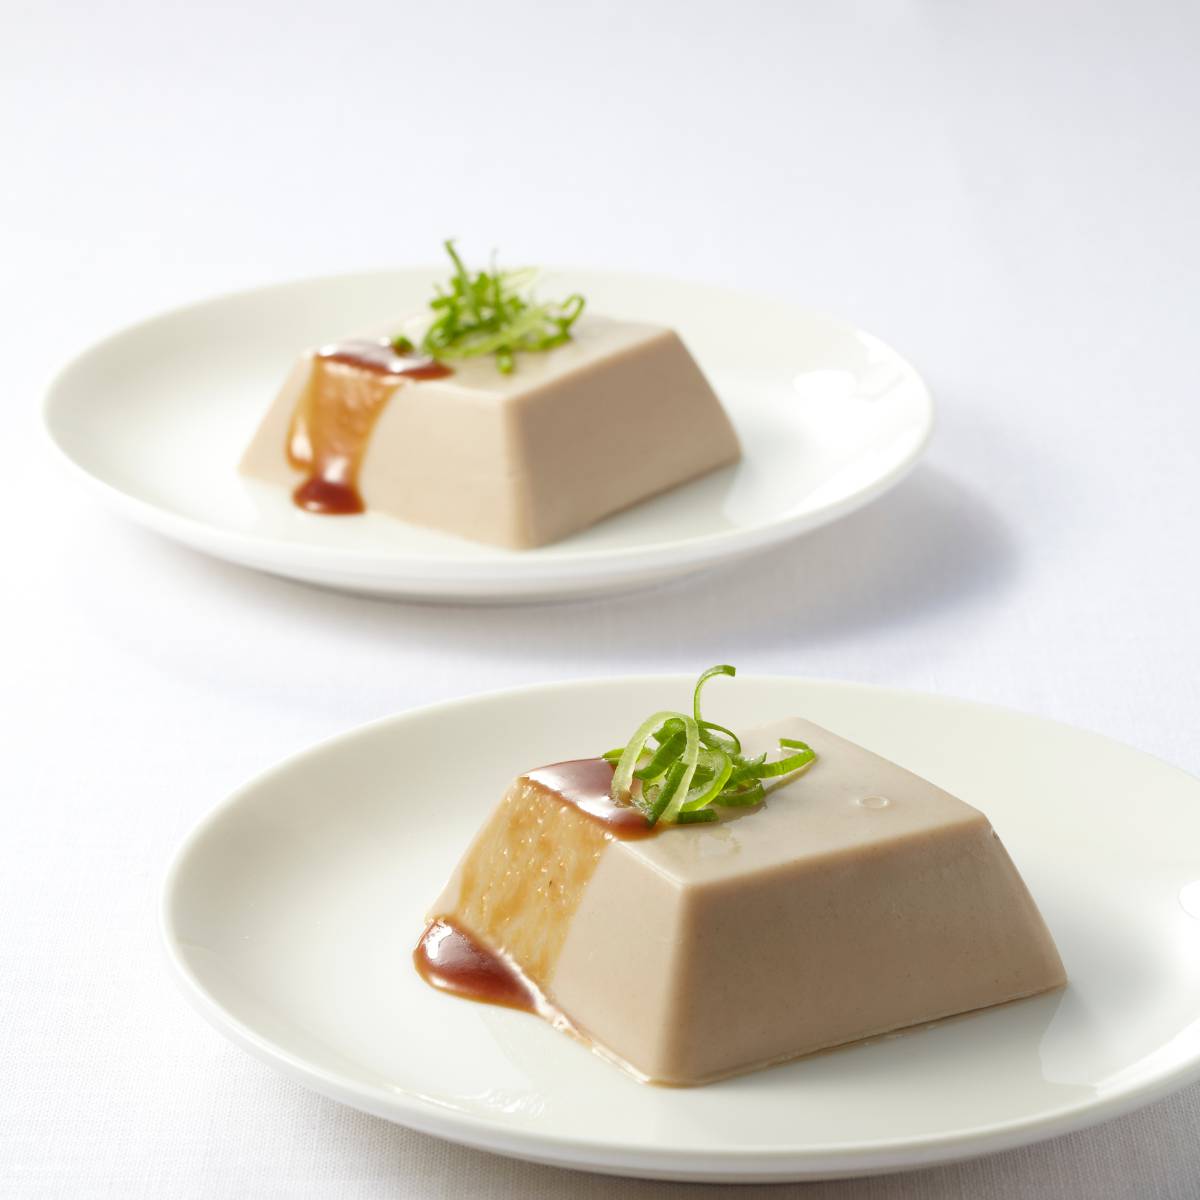 Presentation of raw tofu on a plate